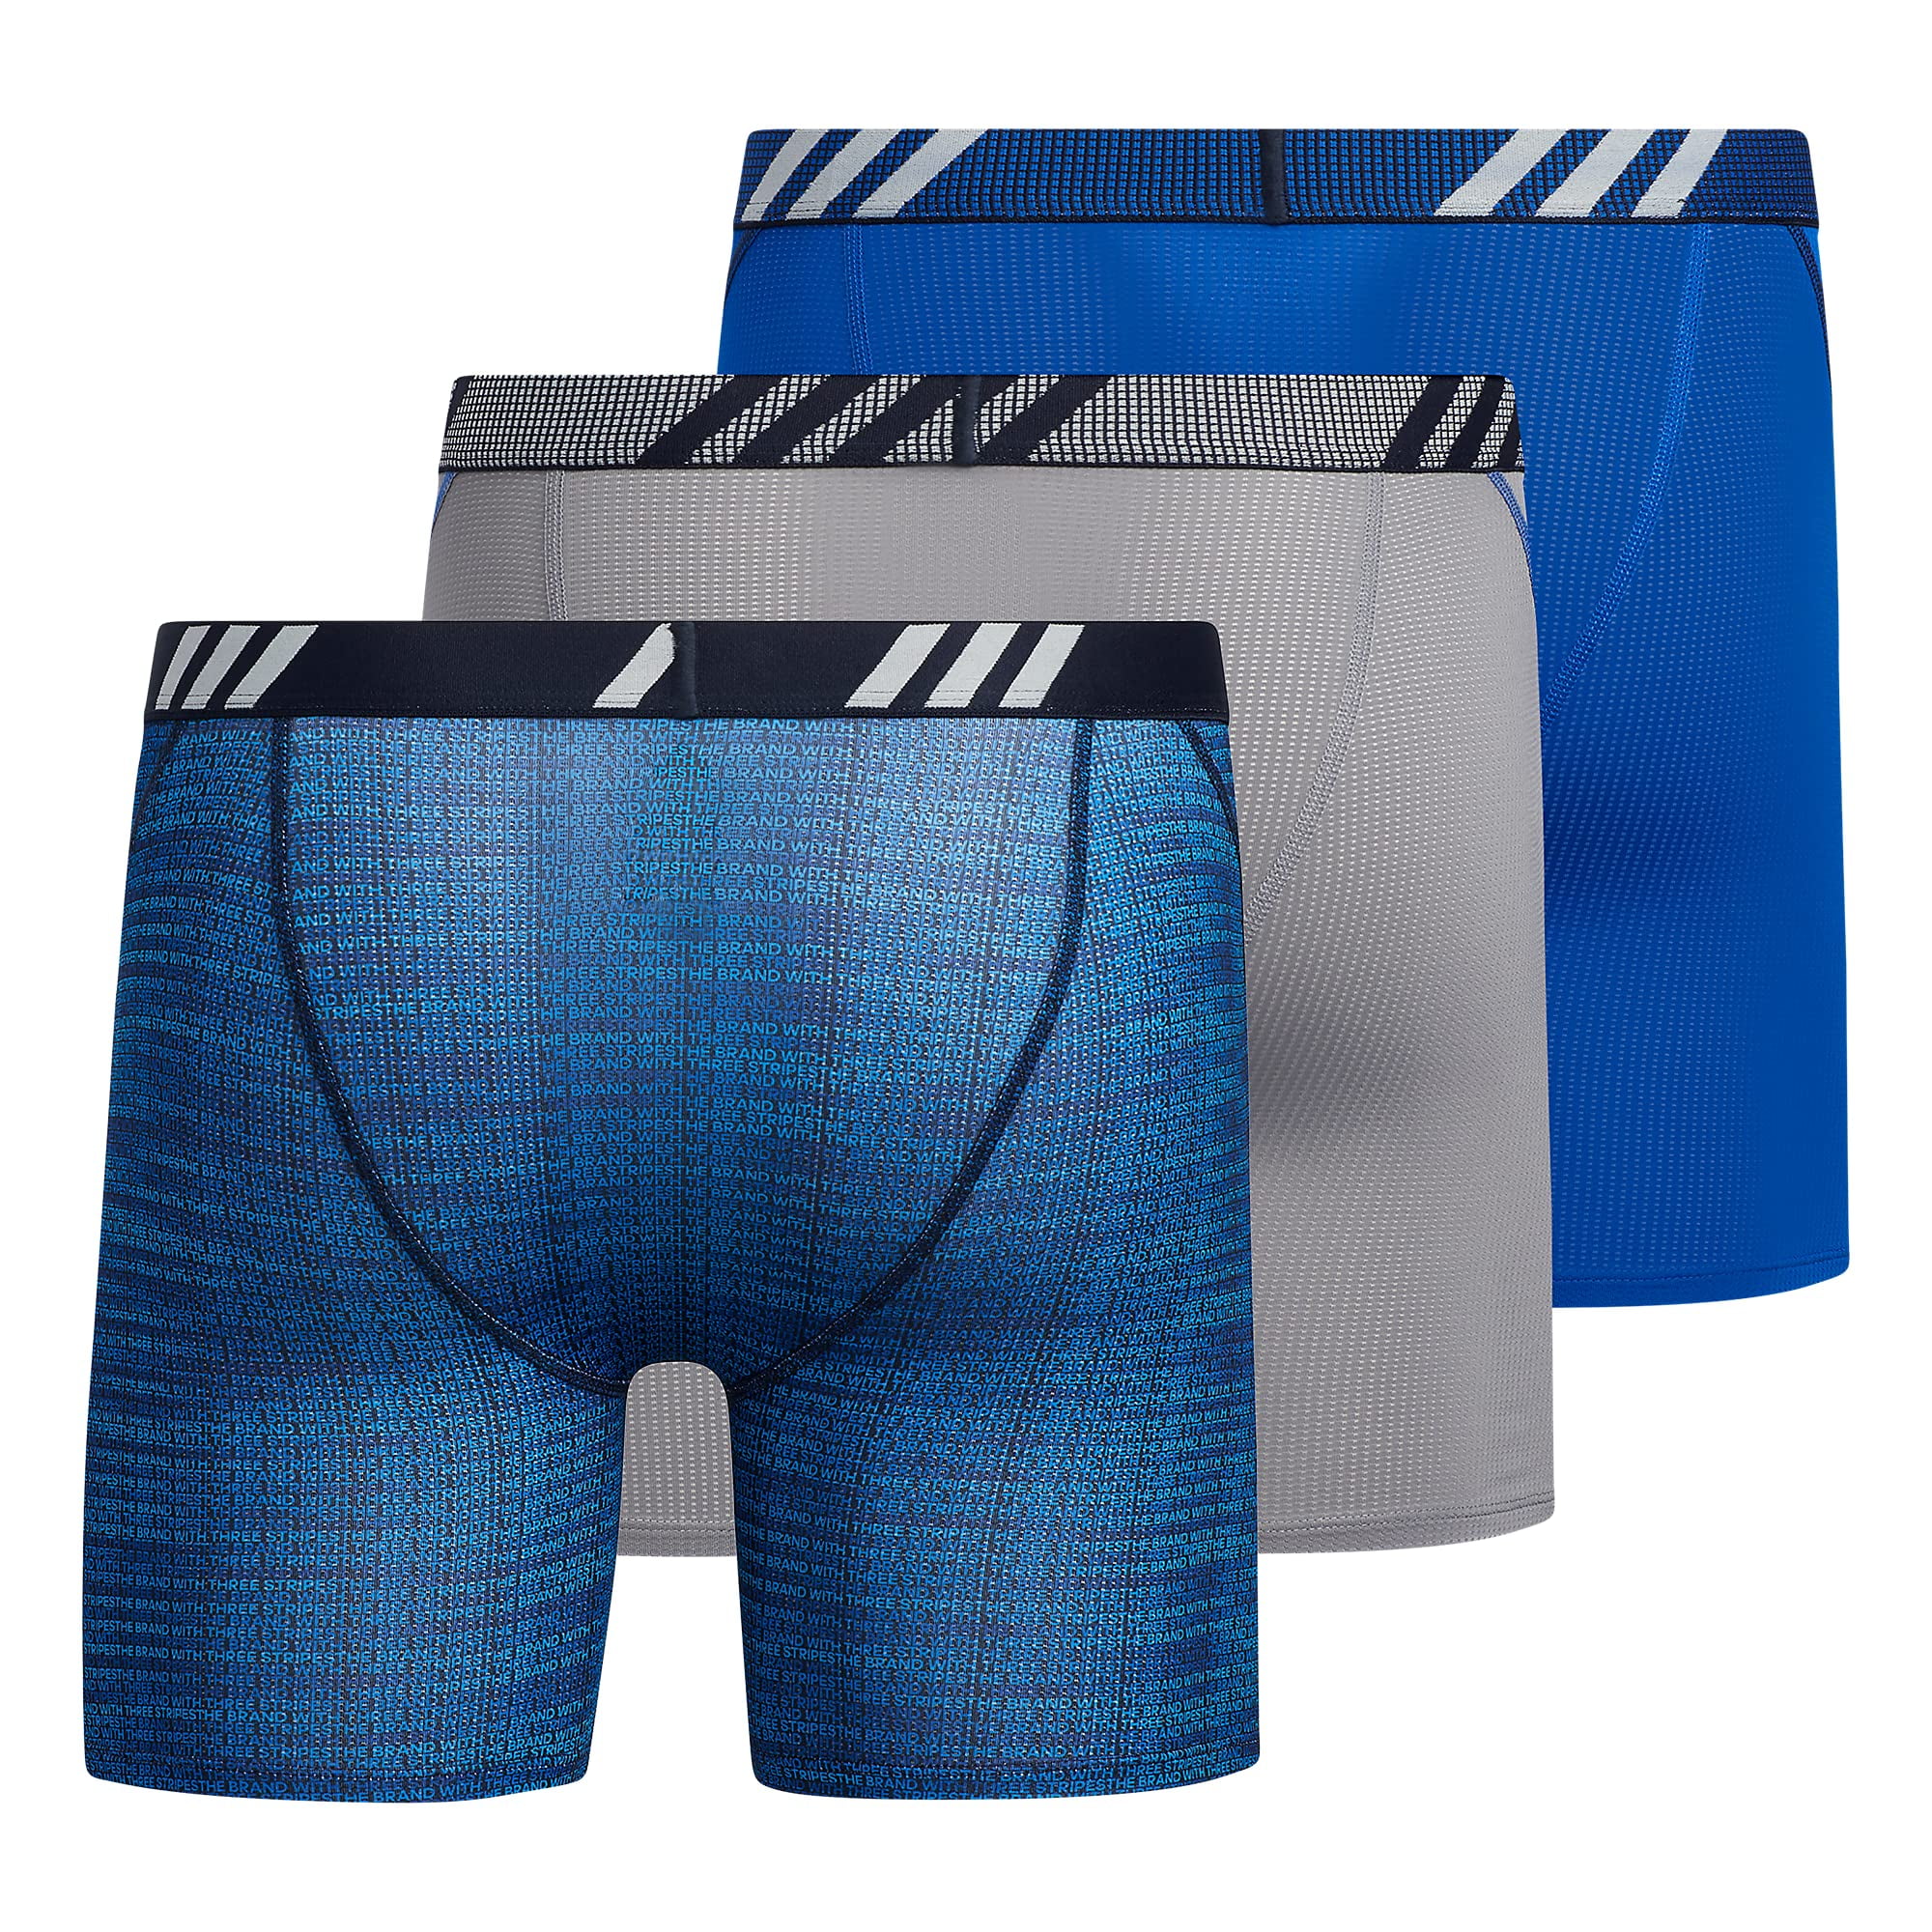 Adidas Men's Performance Boxer Brief Underwear (3-Pack) - Royal